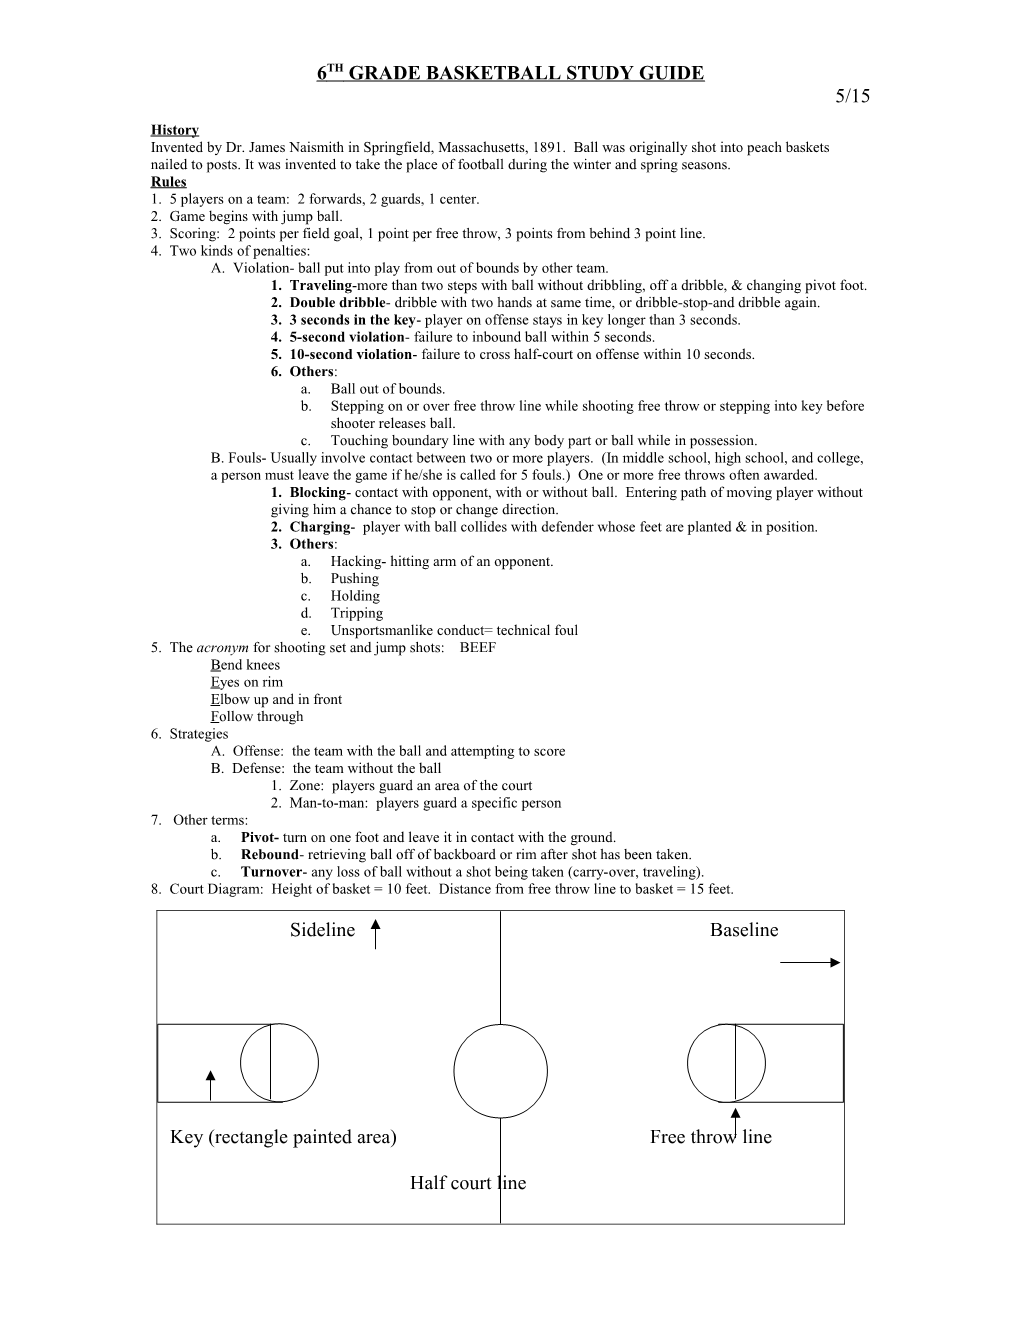 Basketball Study Guide s3